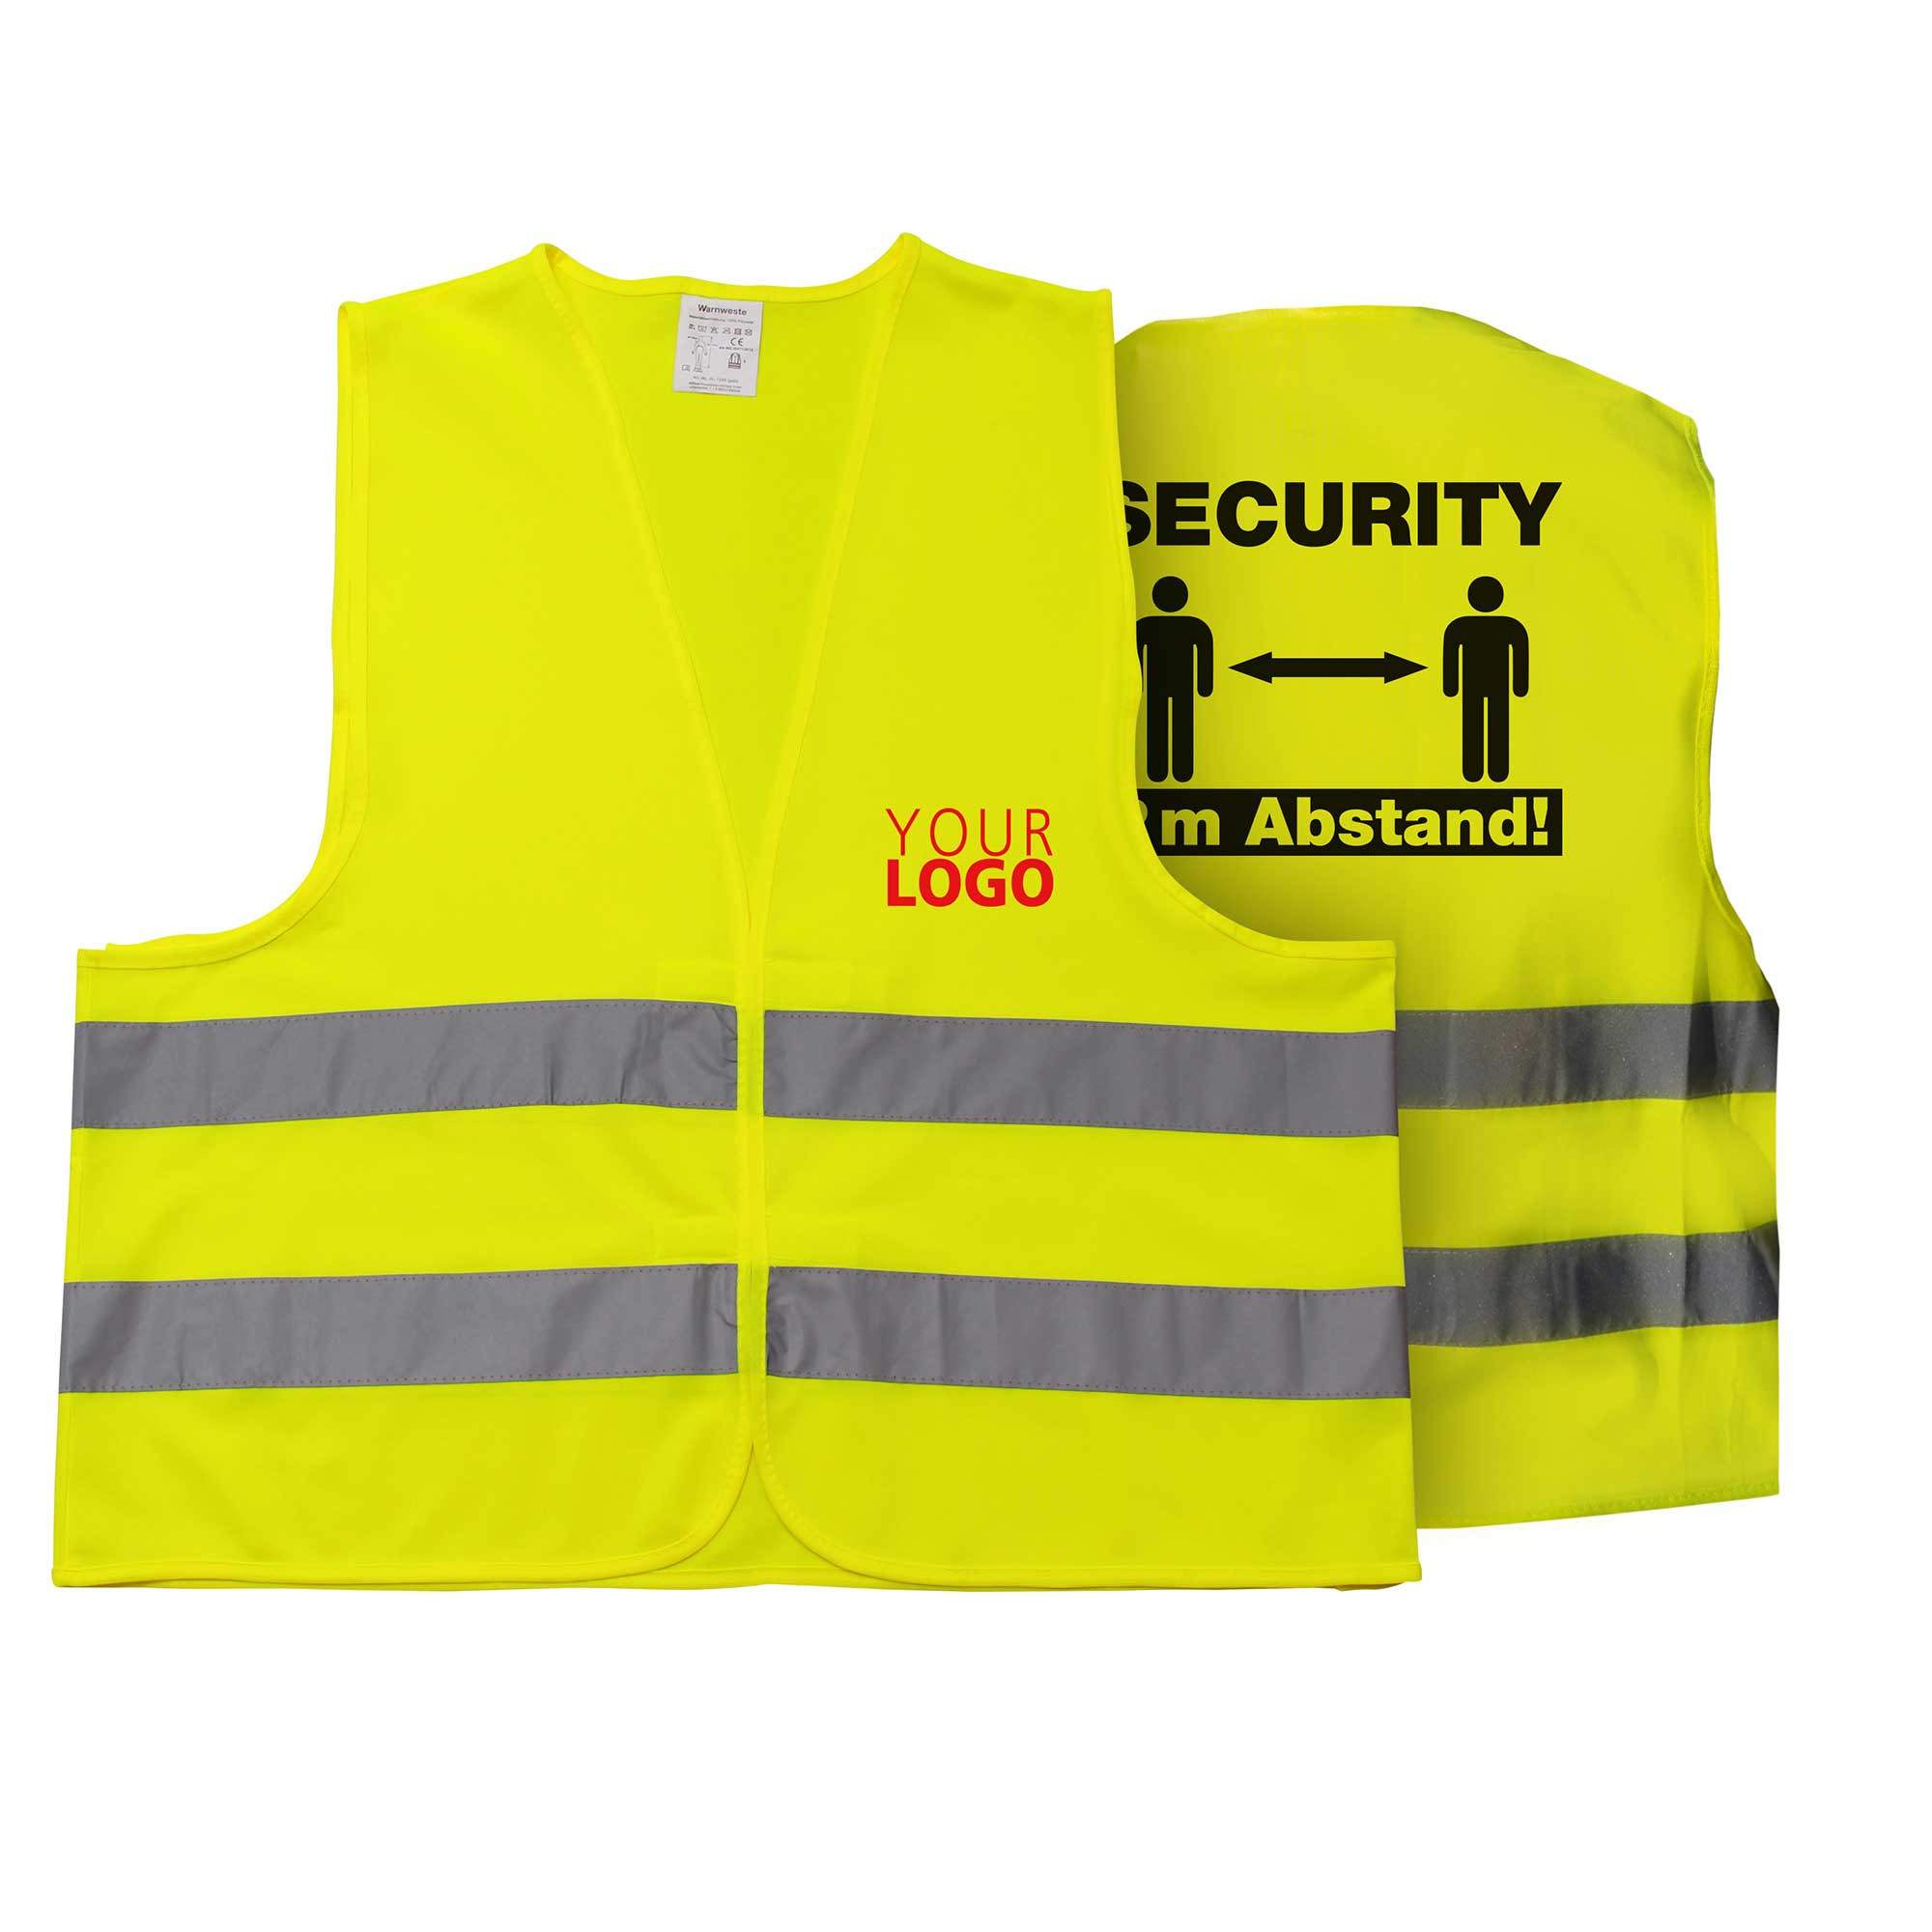 Offizielle Warnweste gemäß EN ISO 20471 ( Klasse 2) -  Schriftzug-Security